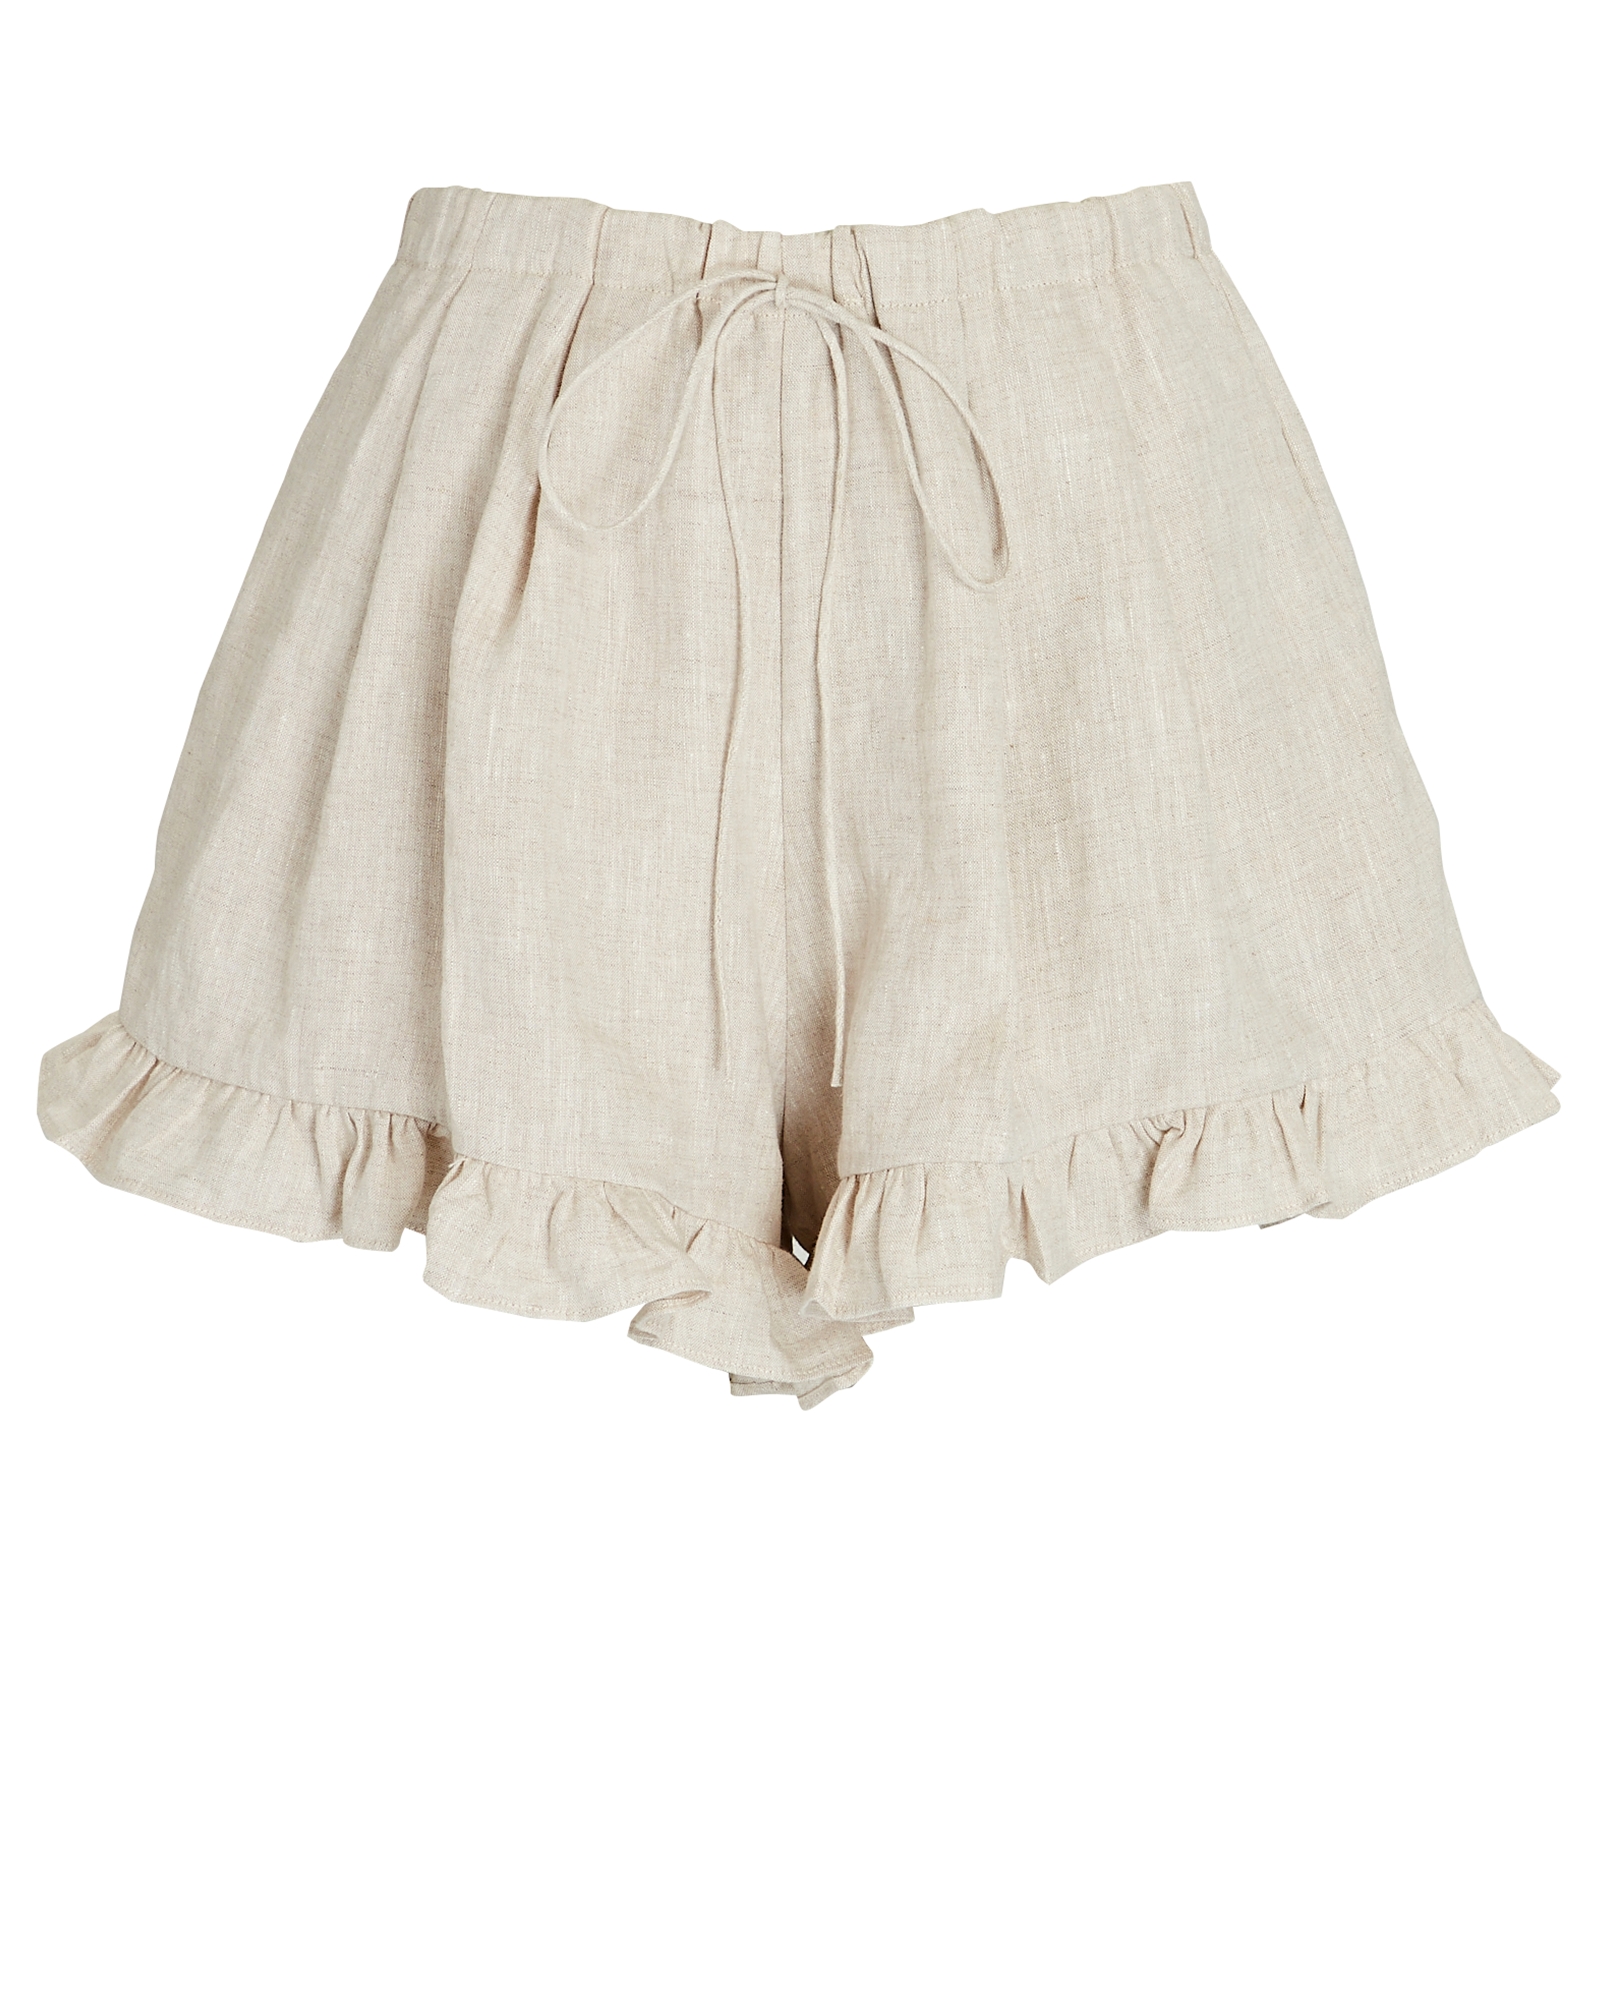 Joslin Gracie Ruffled Linen Shorts | INTERMIX®